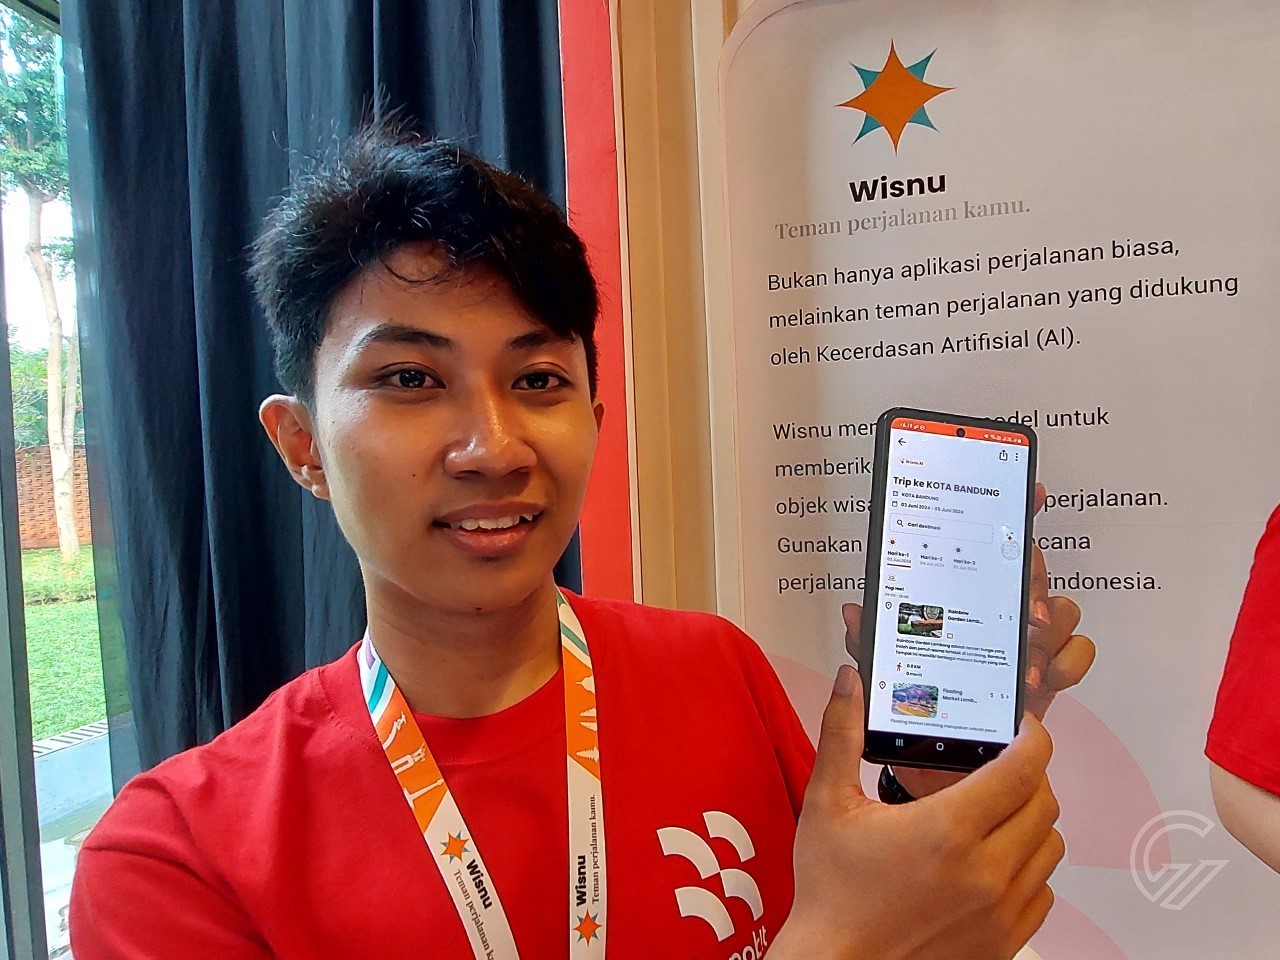 Google Dorong Pemanfaatan AI untuk Kemajuan Indonesia di Era Digital